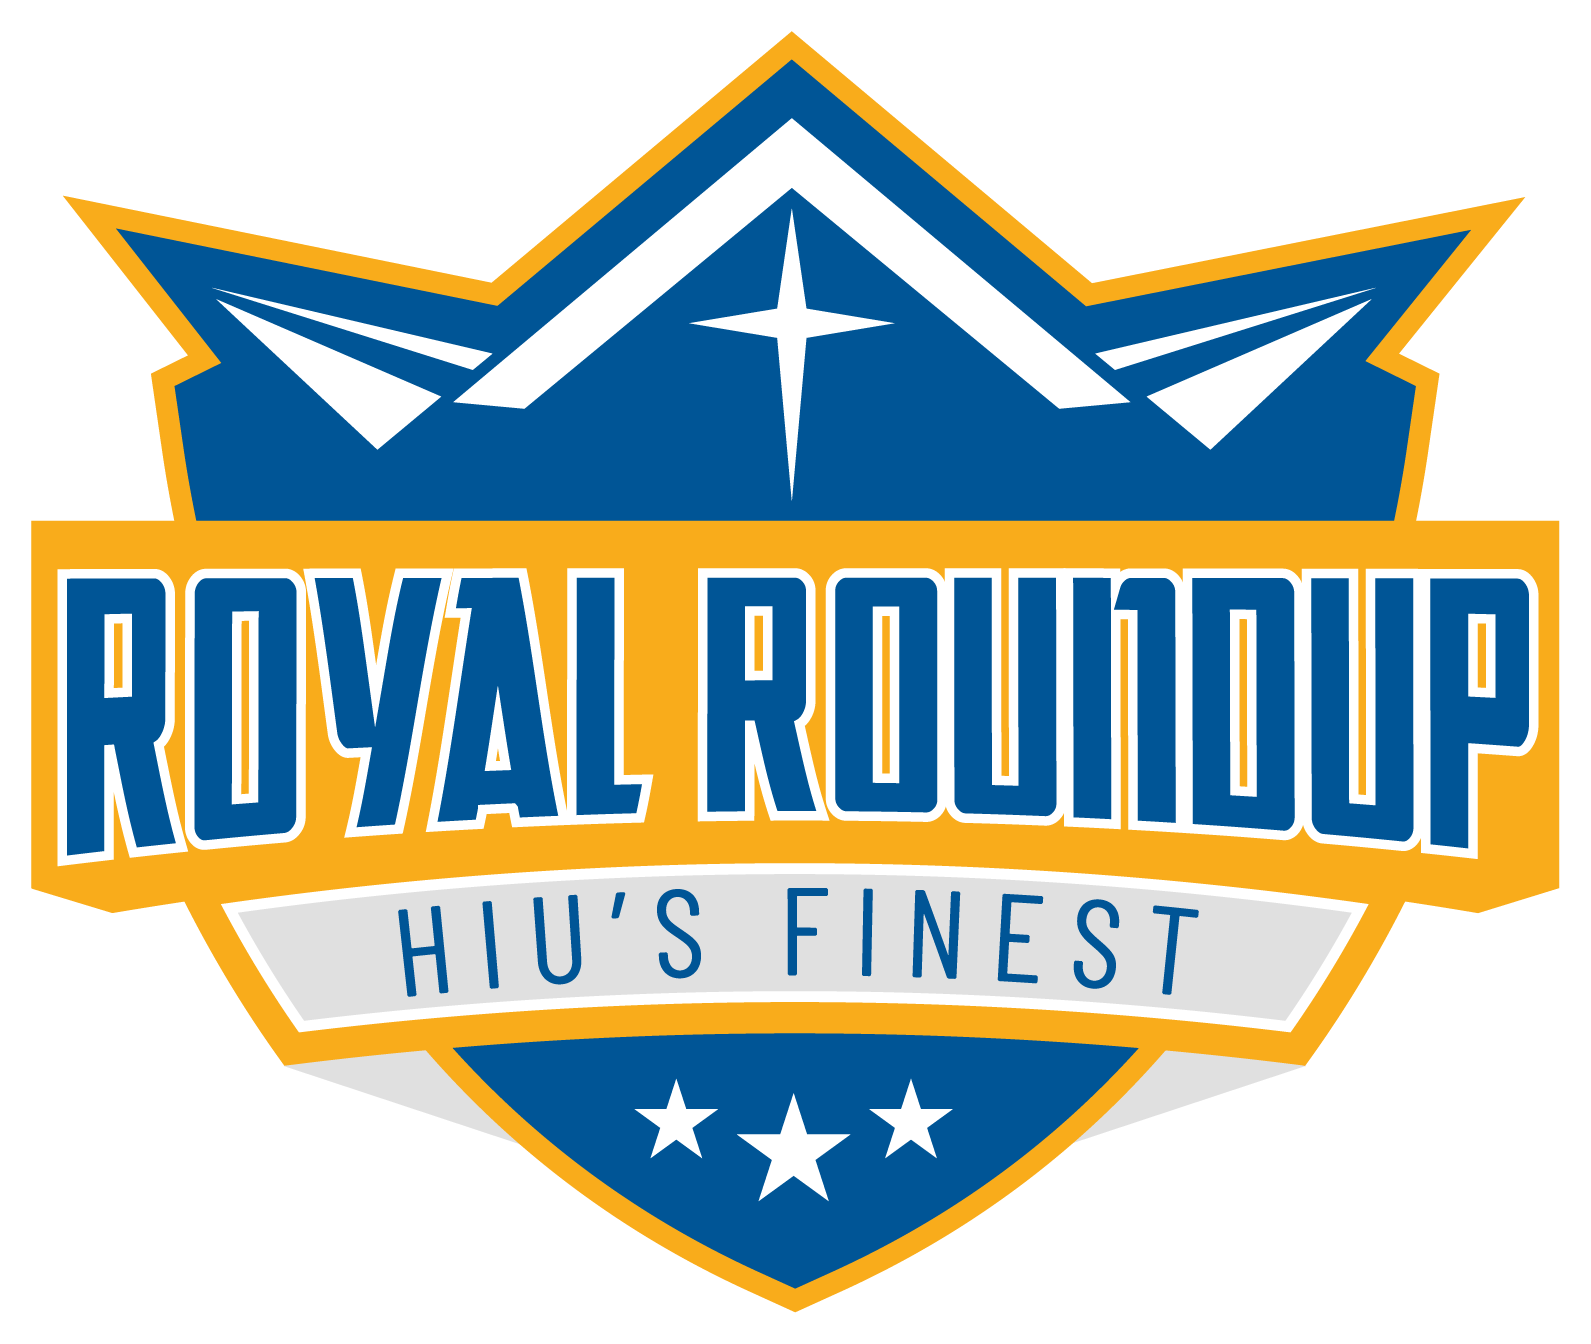 Royal Roundup